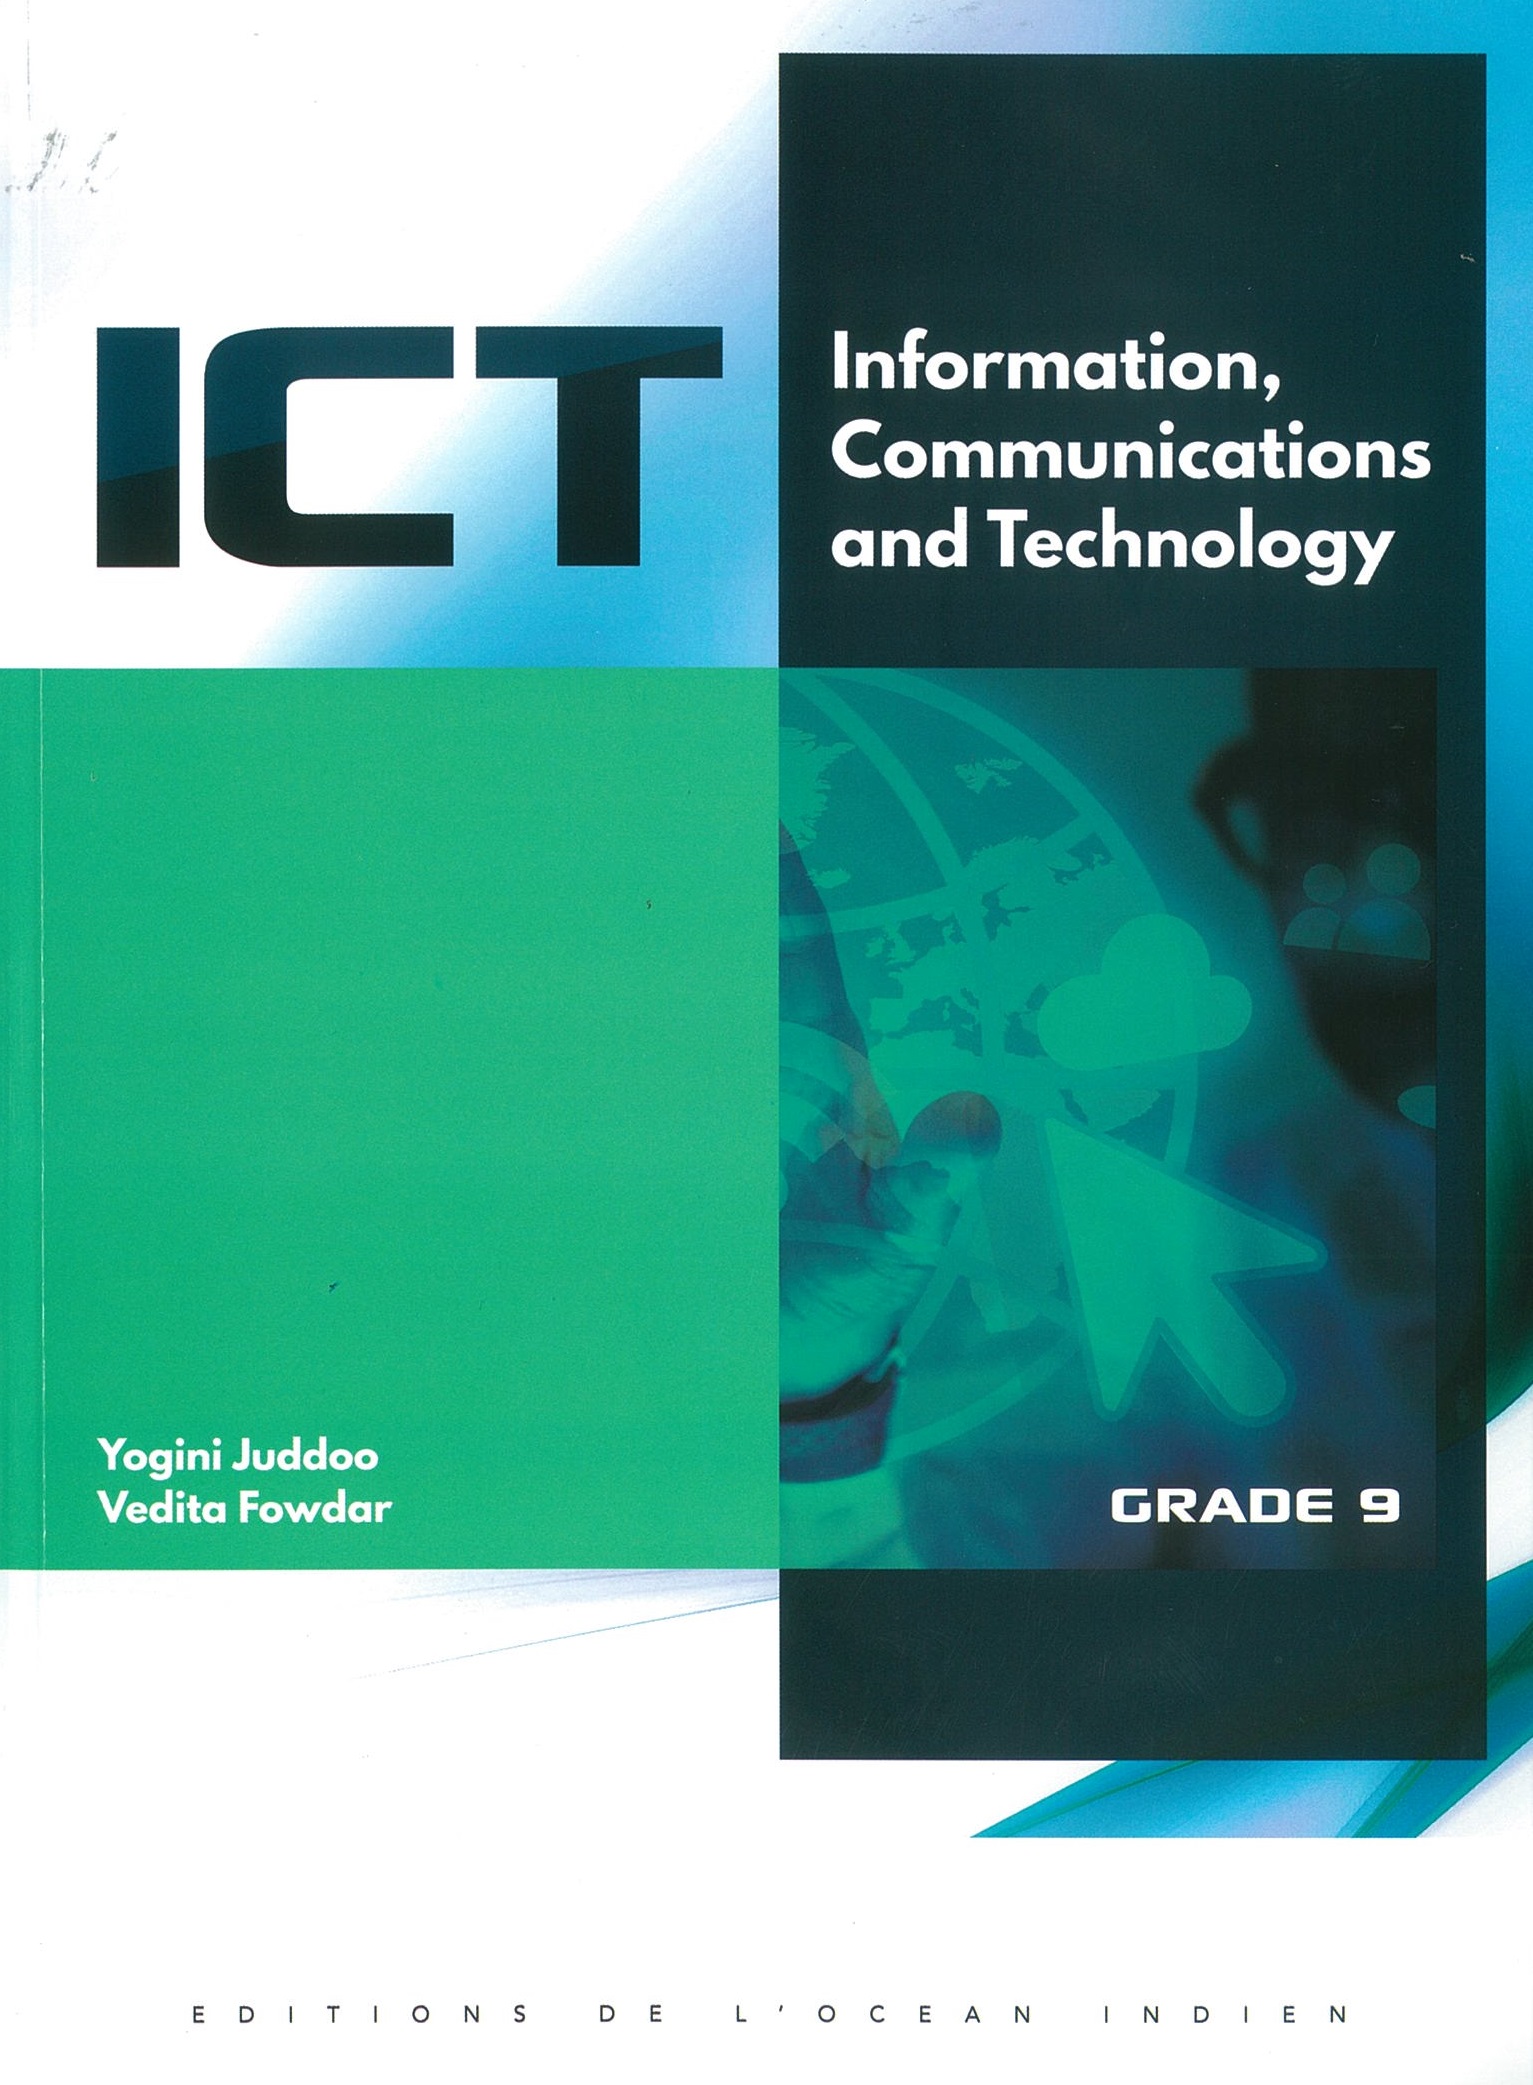 INFORMATION COMMUNICATIONS AND TECHNOLOGY GRADE 9 - JUDDOO